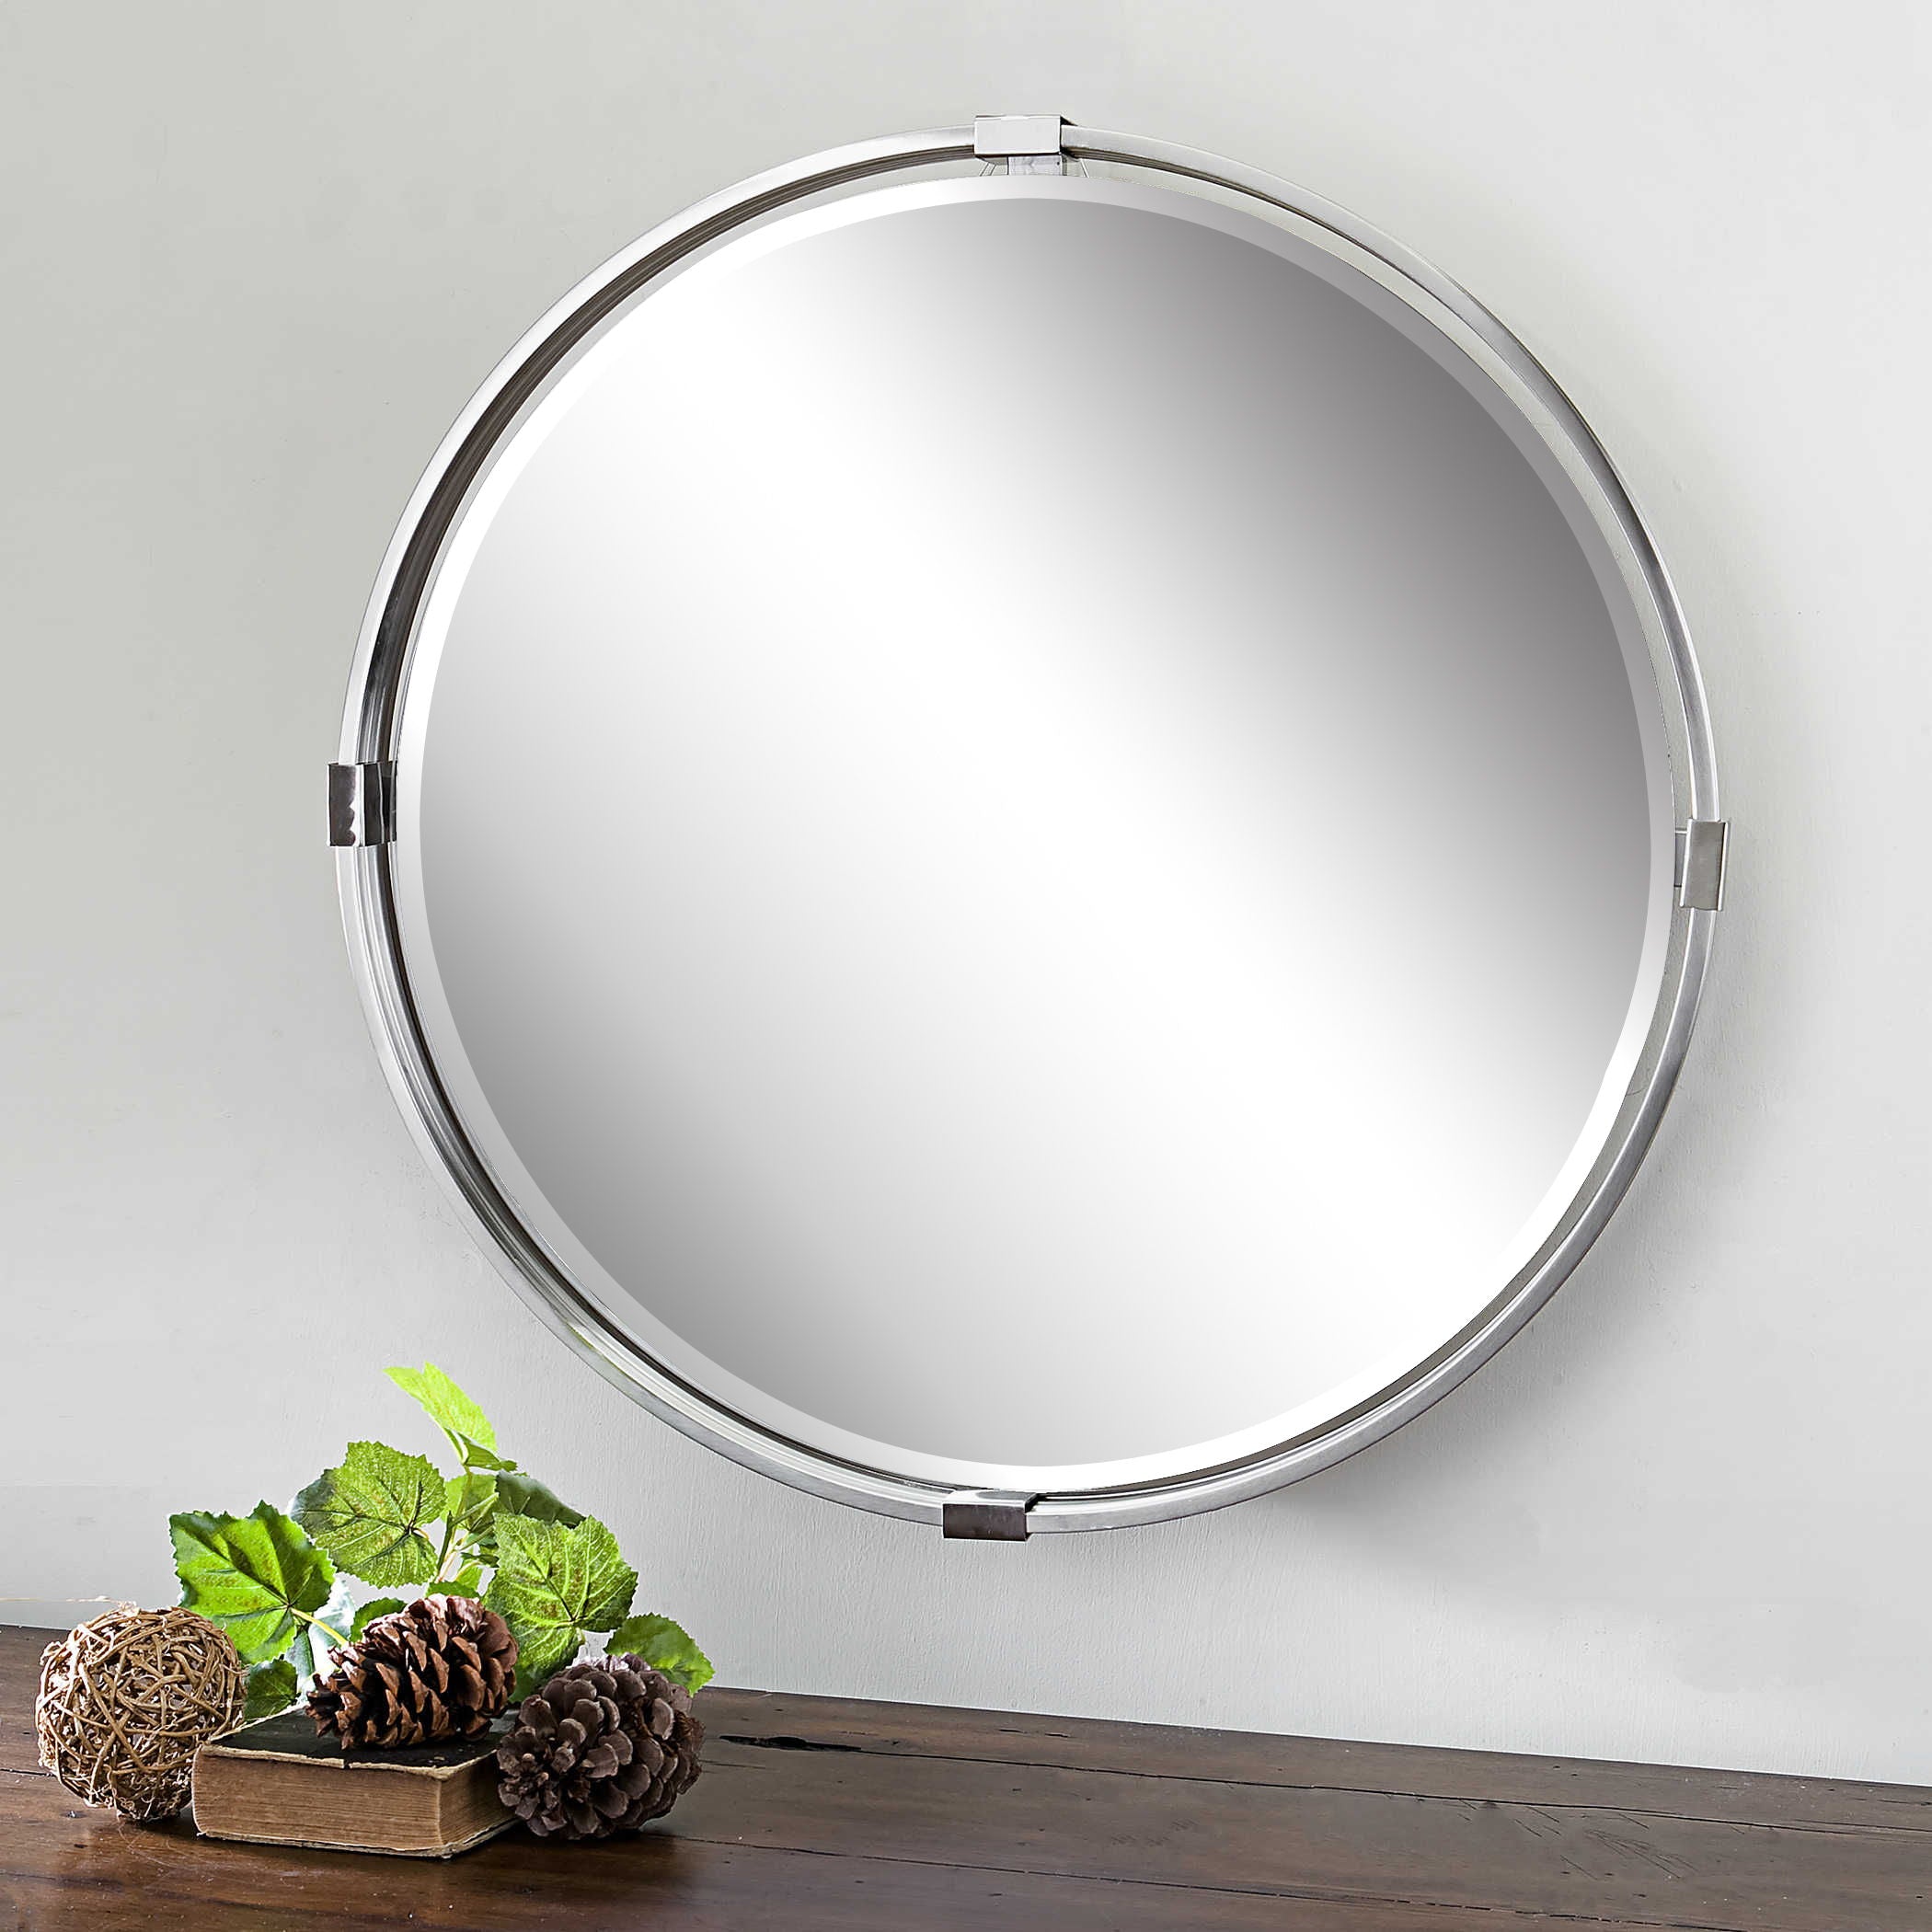 Tazlina - Round Mirror - Brushed Nickel